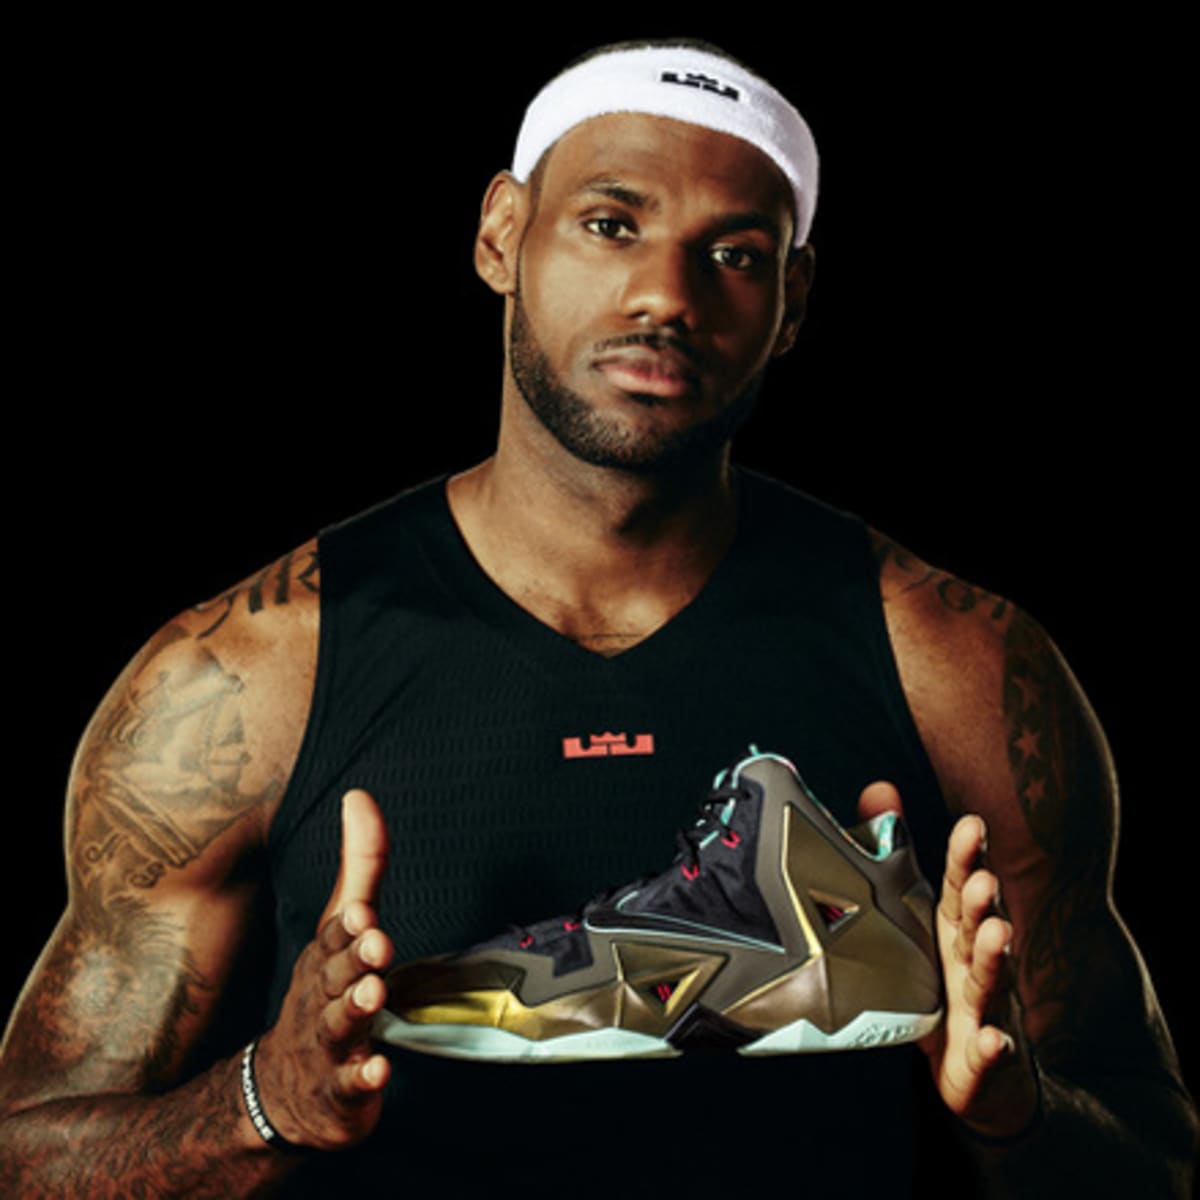 Nike unveils LeBron James' latest signature sneaker, the 'LeBron